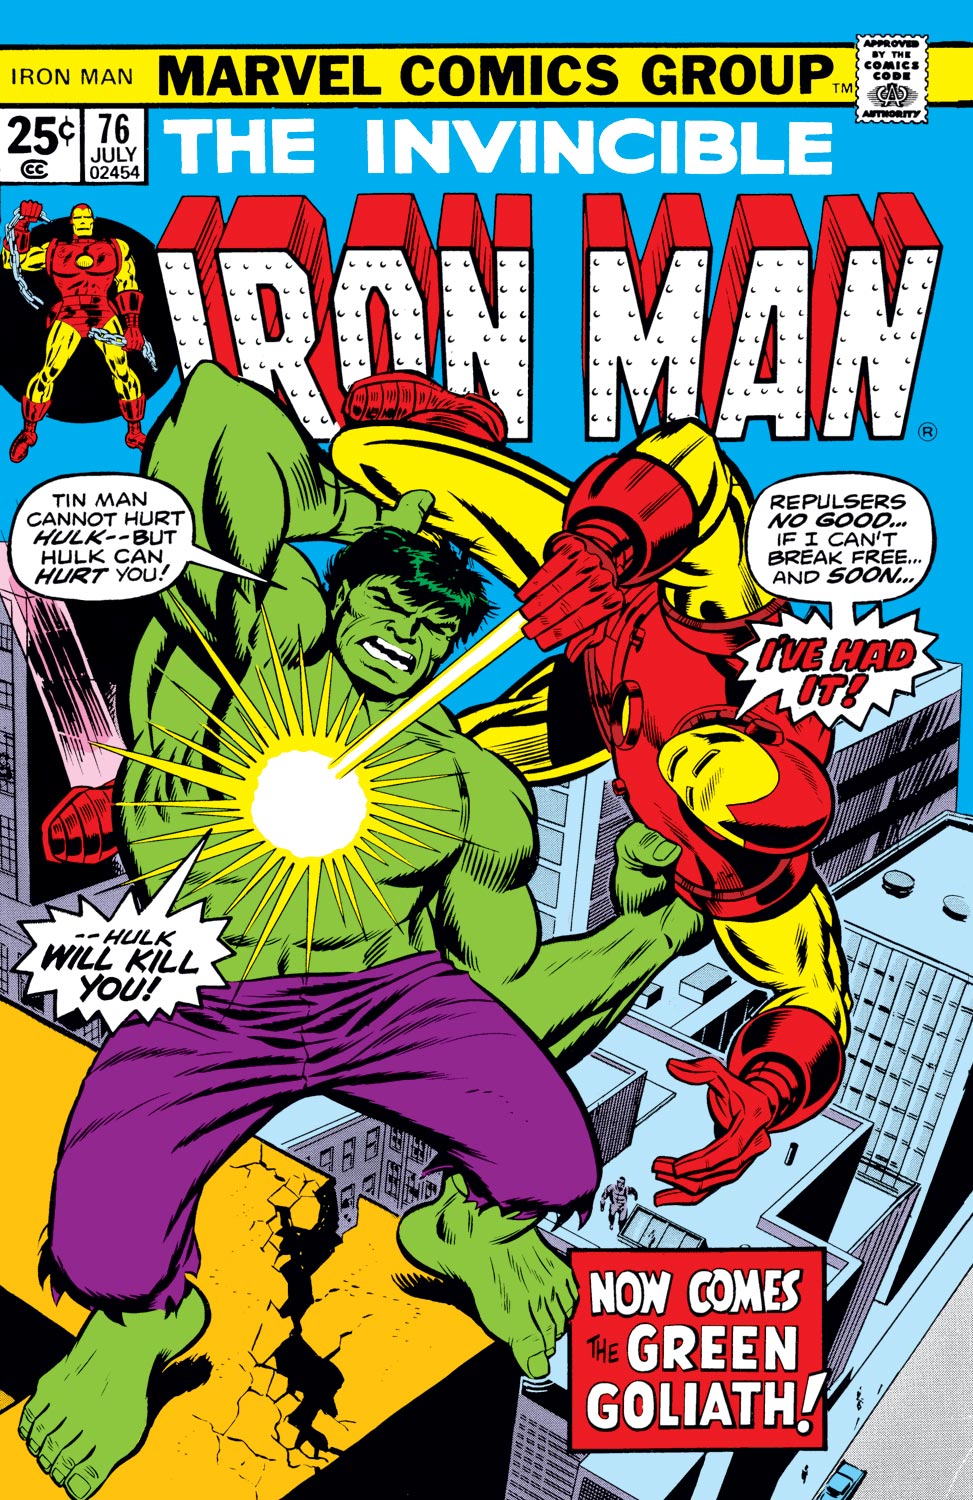 Iron Man (1968) #76